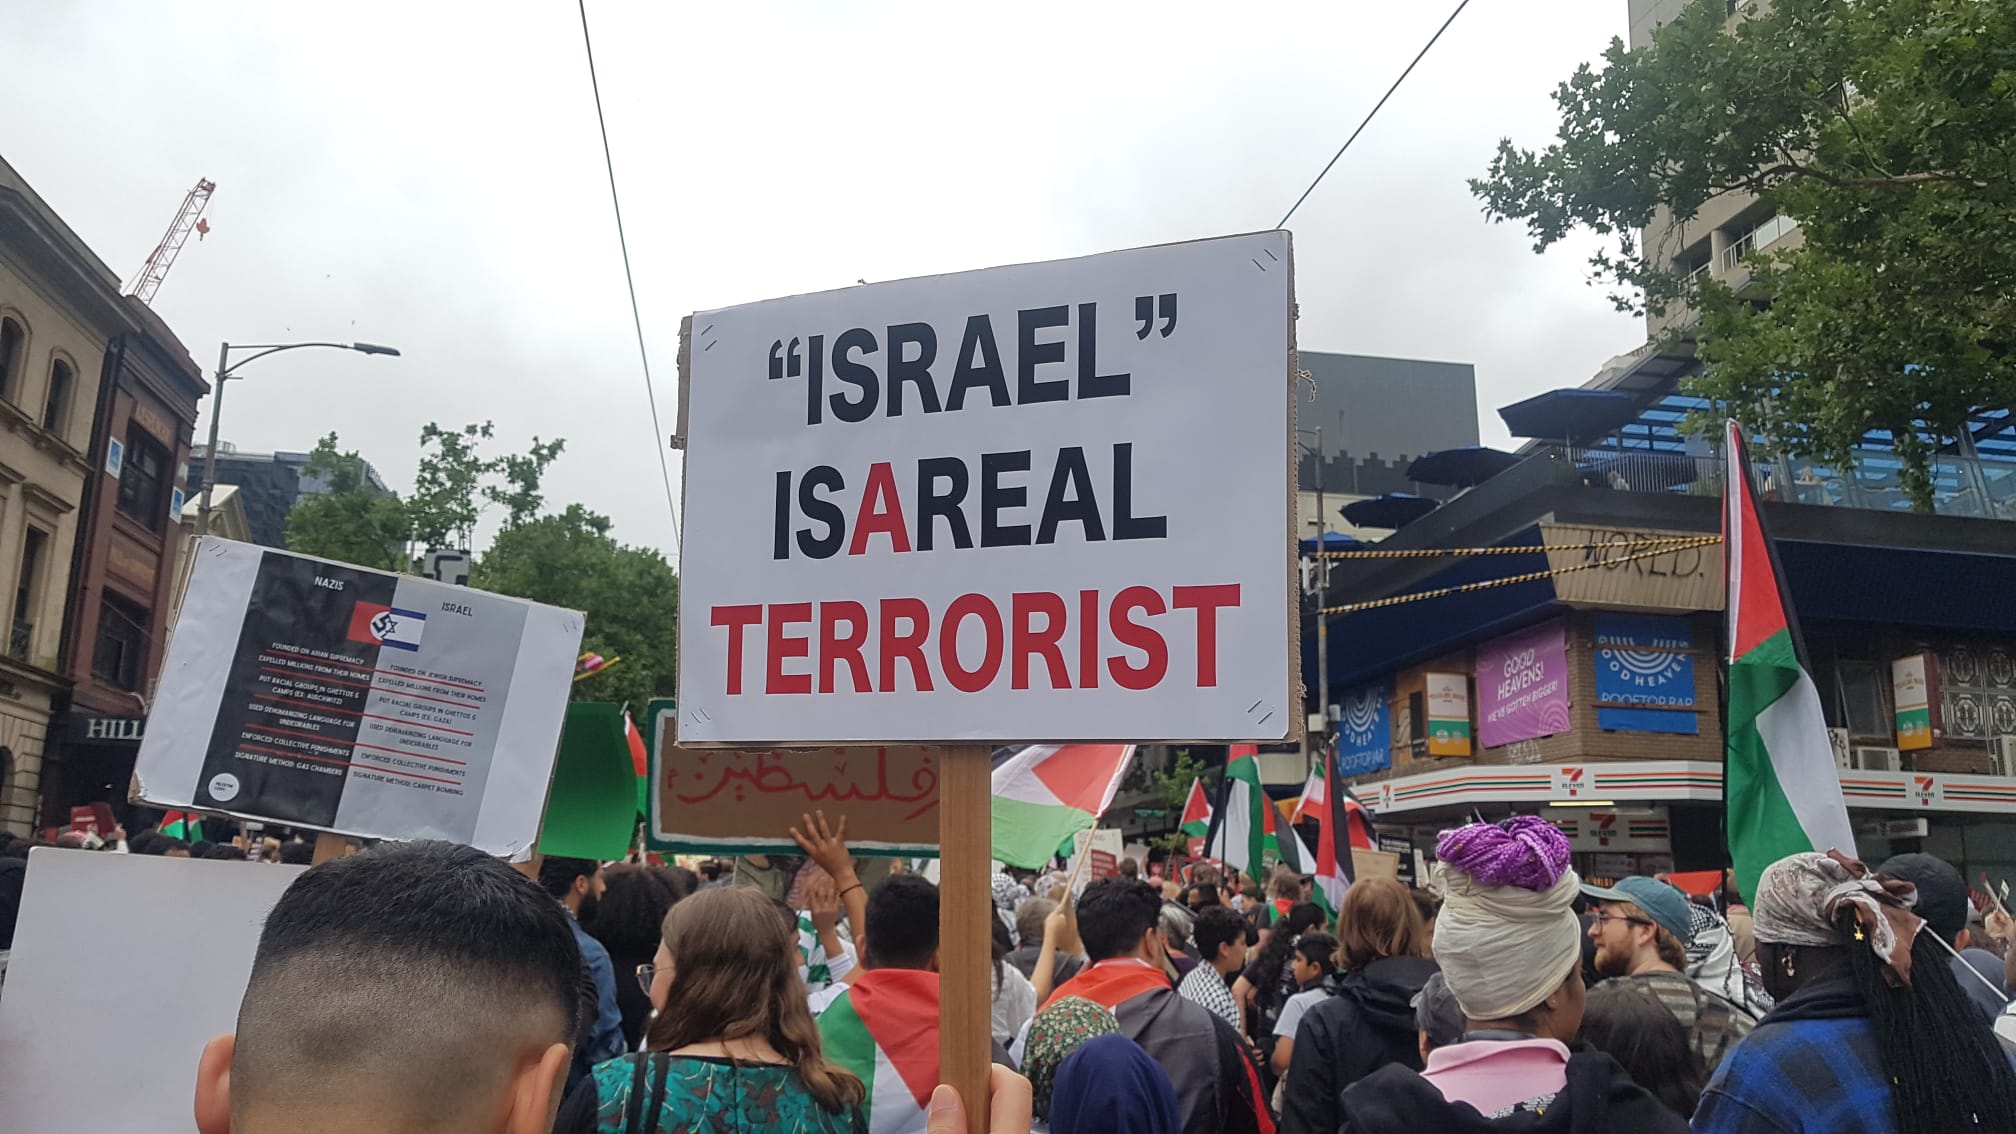 Israel is the real terrorist, Naarm/Melbourne, December 10